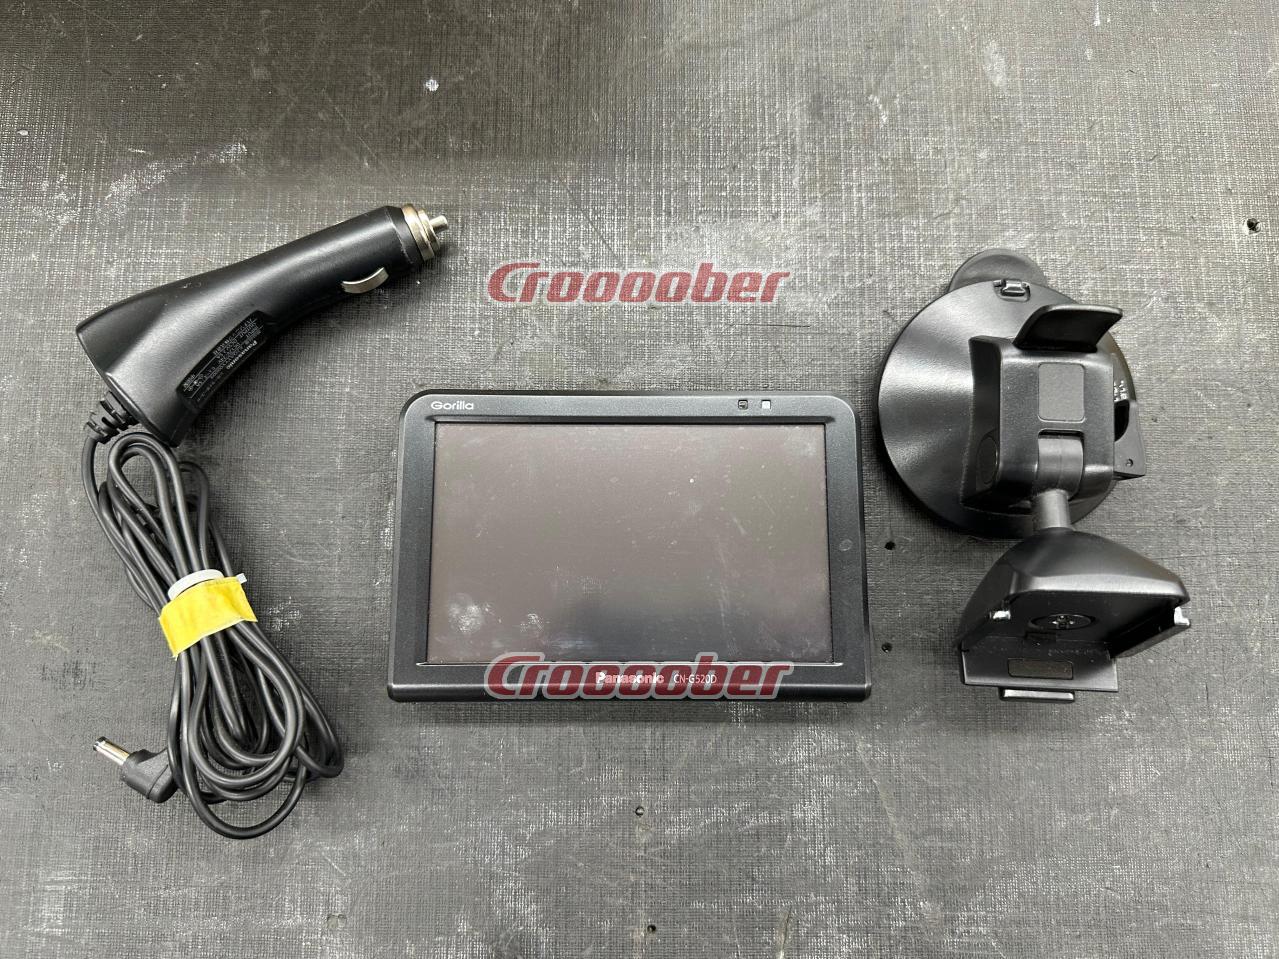 Panasonic Portable Car Navigation System Gorilla CN-5 Inches Seg